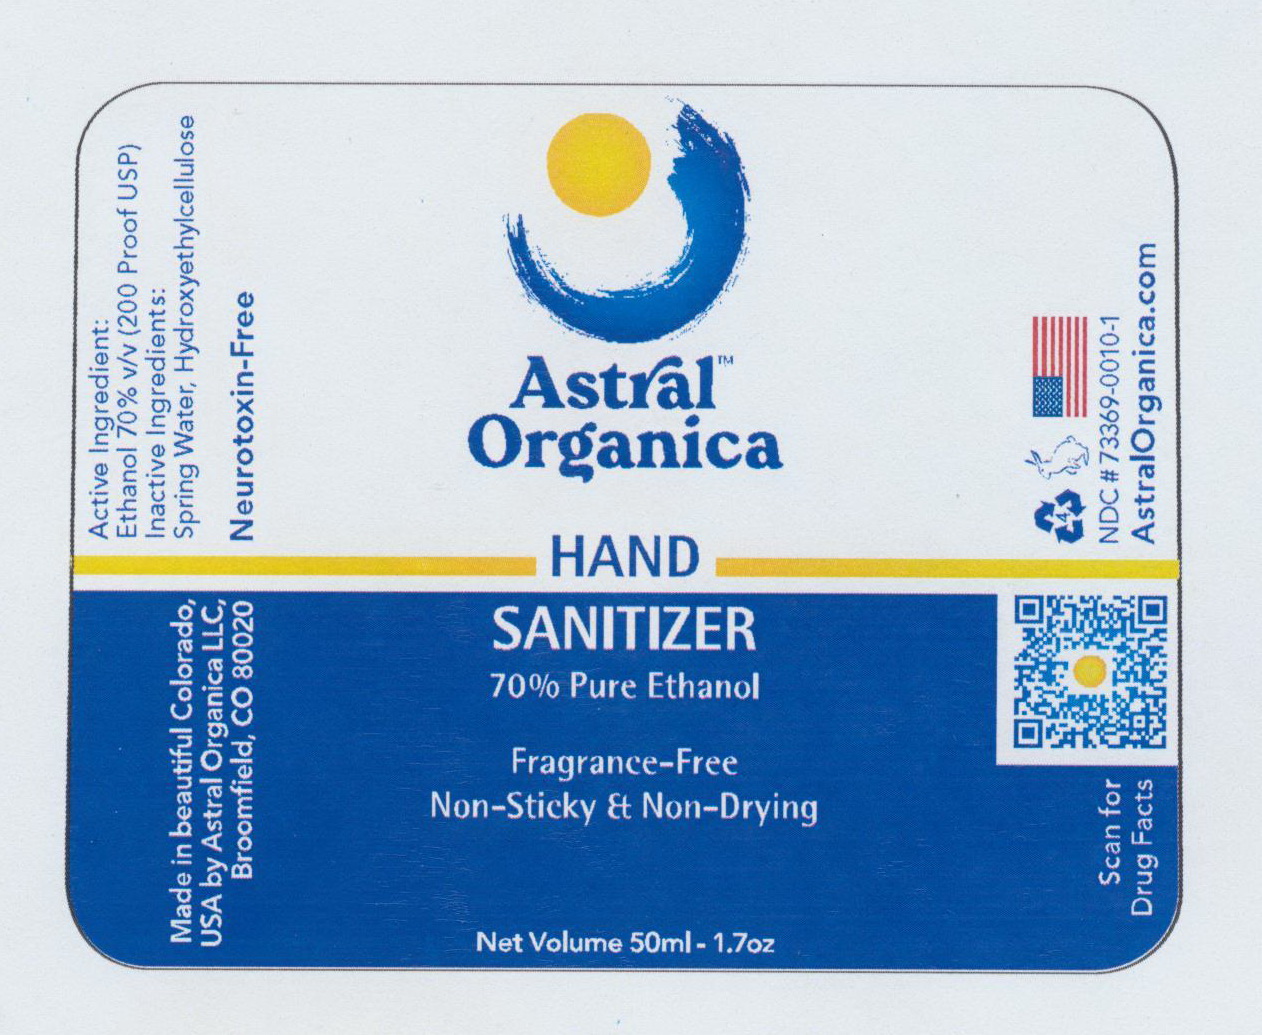 AstralOrganica HS Label